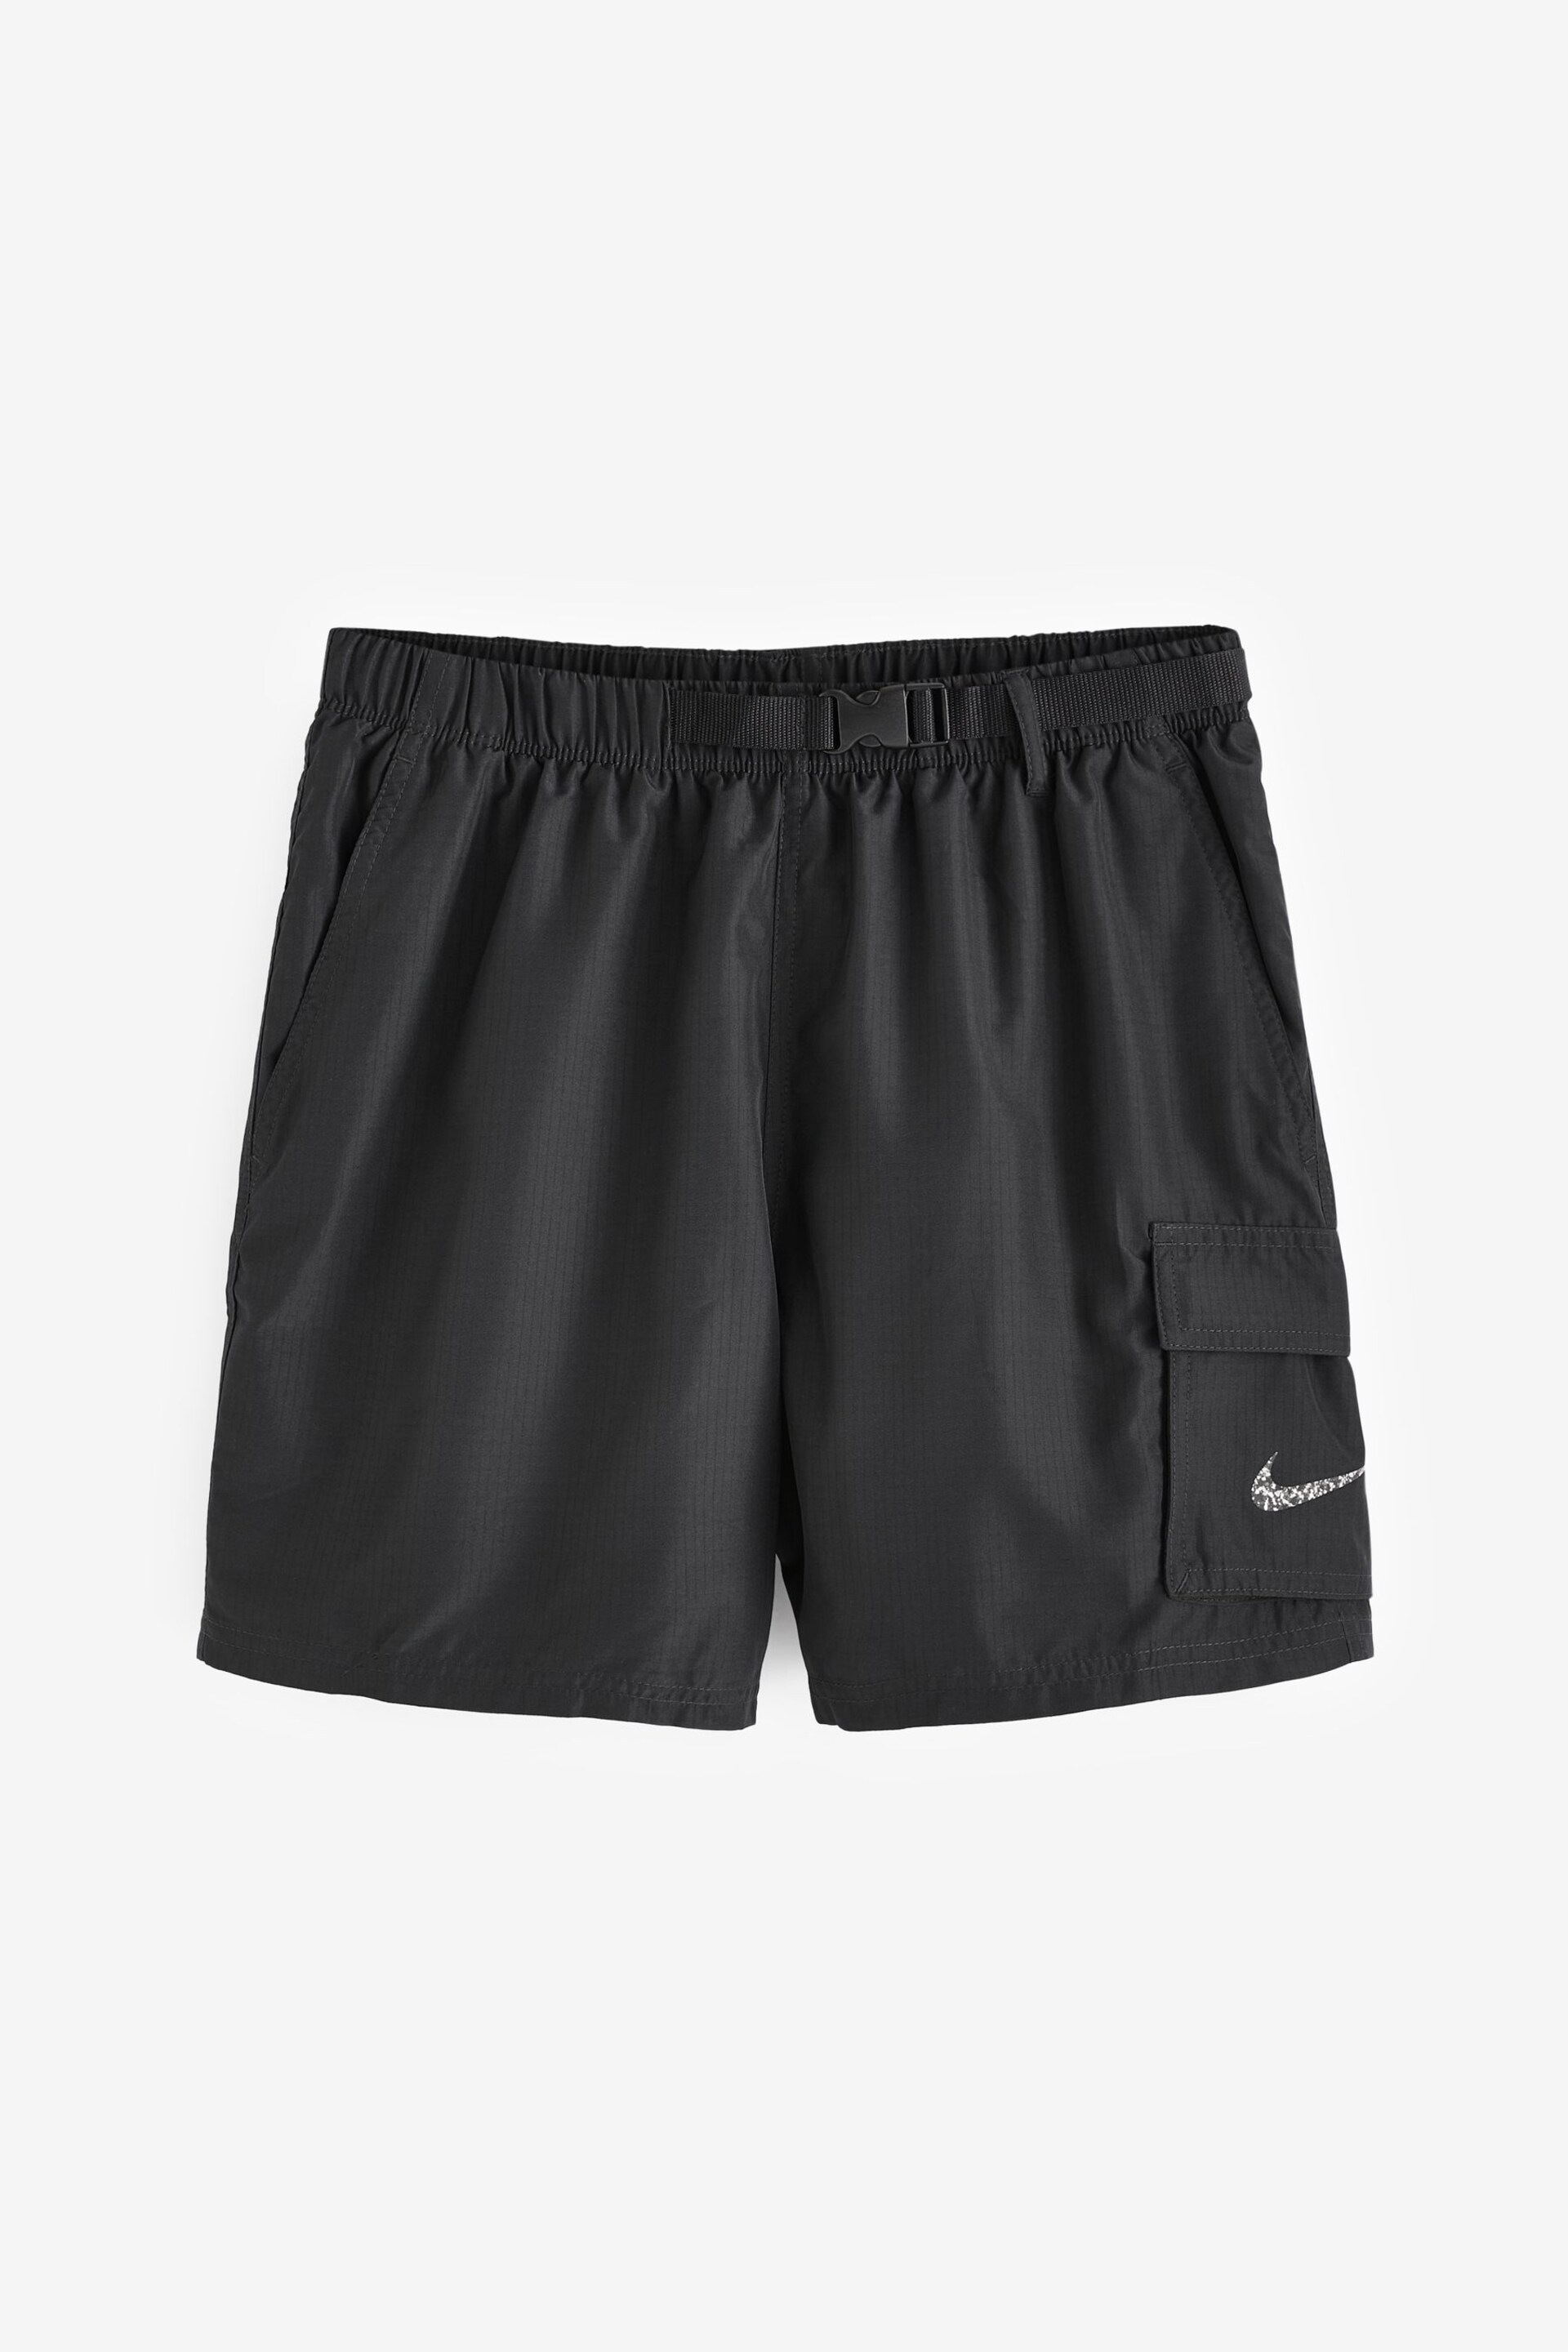 Nike Black 5 Inch Essential Volley Cargo Swim Shorts - Image 8 of 9